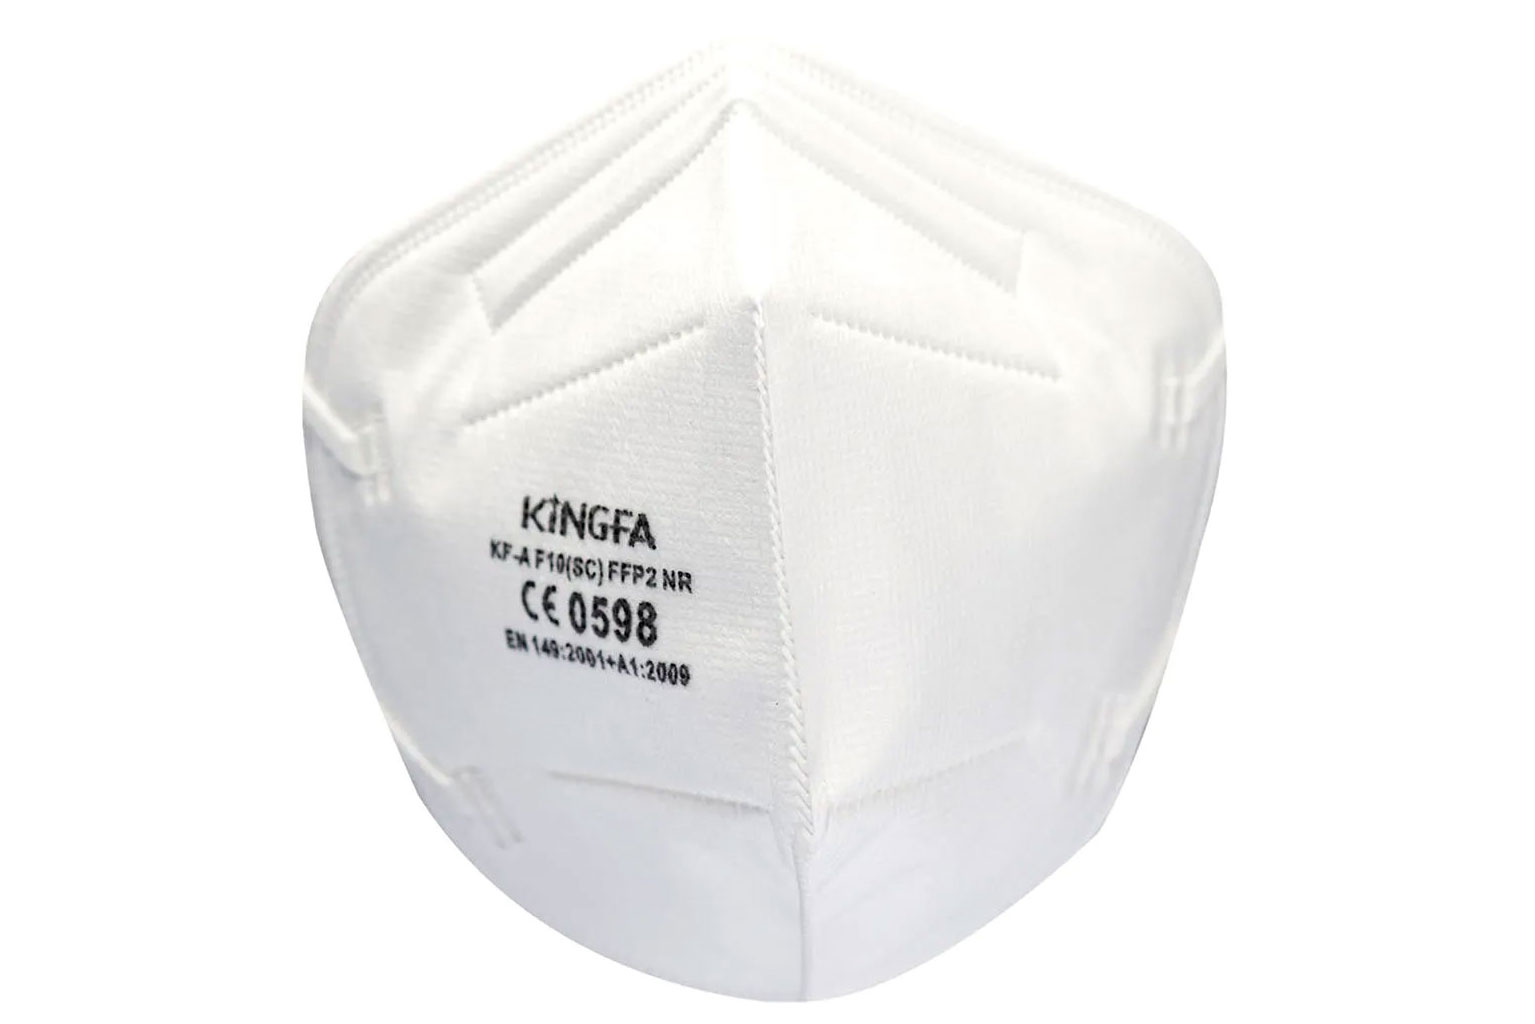 Kingfa FFP2 NR KF-A F10 (SC) 10 pcs. with CE Zertifizierung 